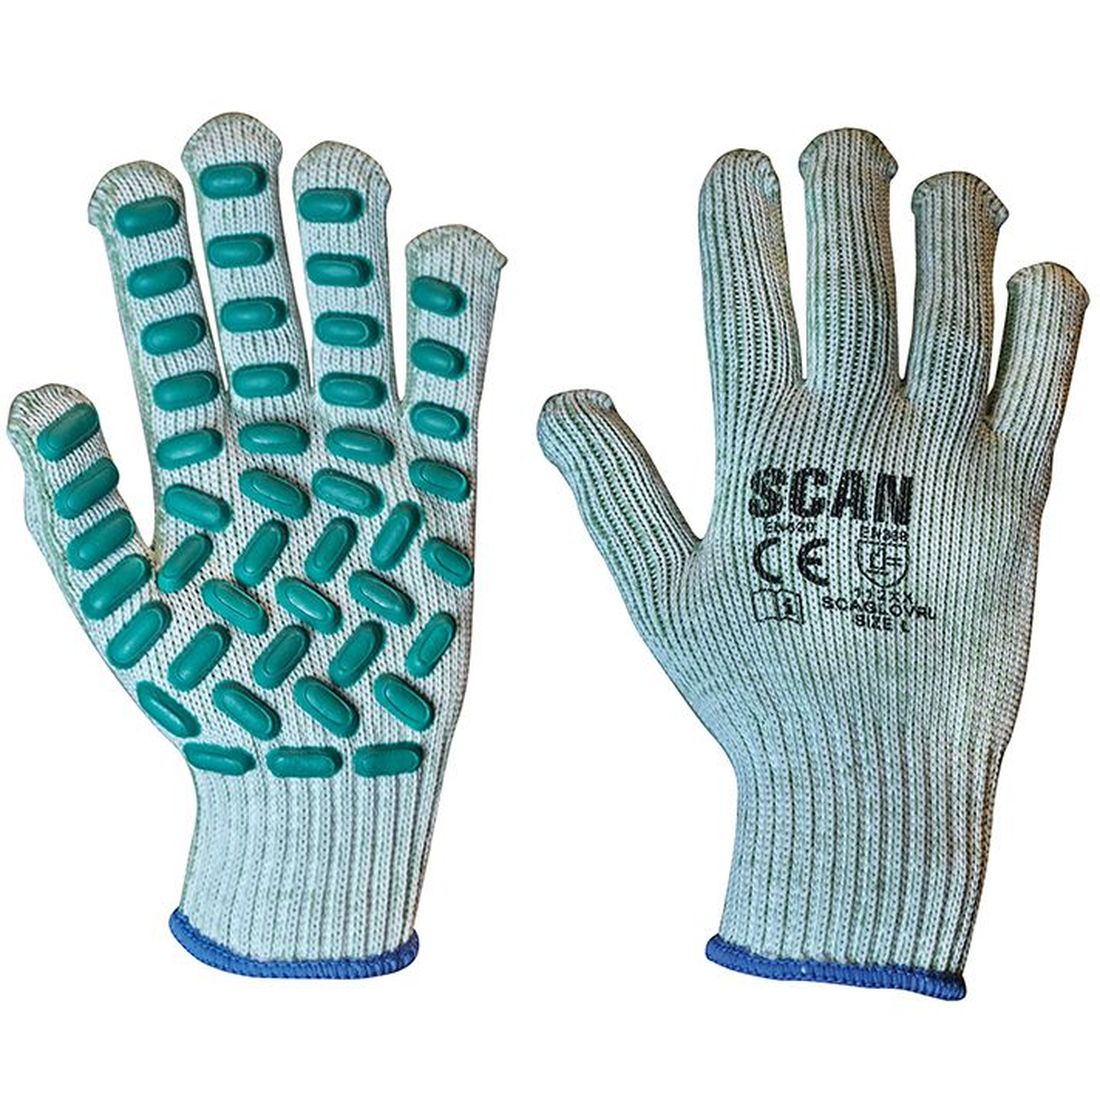 Scan Vibration Resistant Latex Foam Gloves - L (Size 9)                              